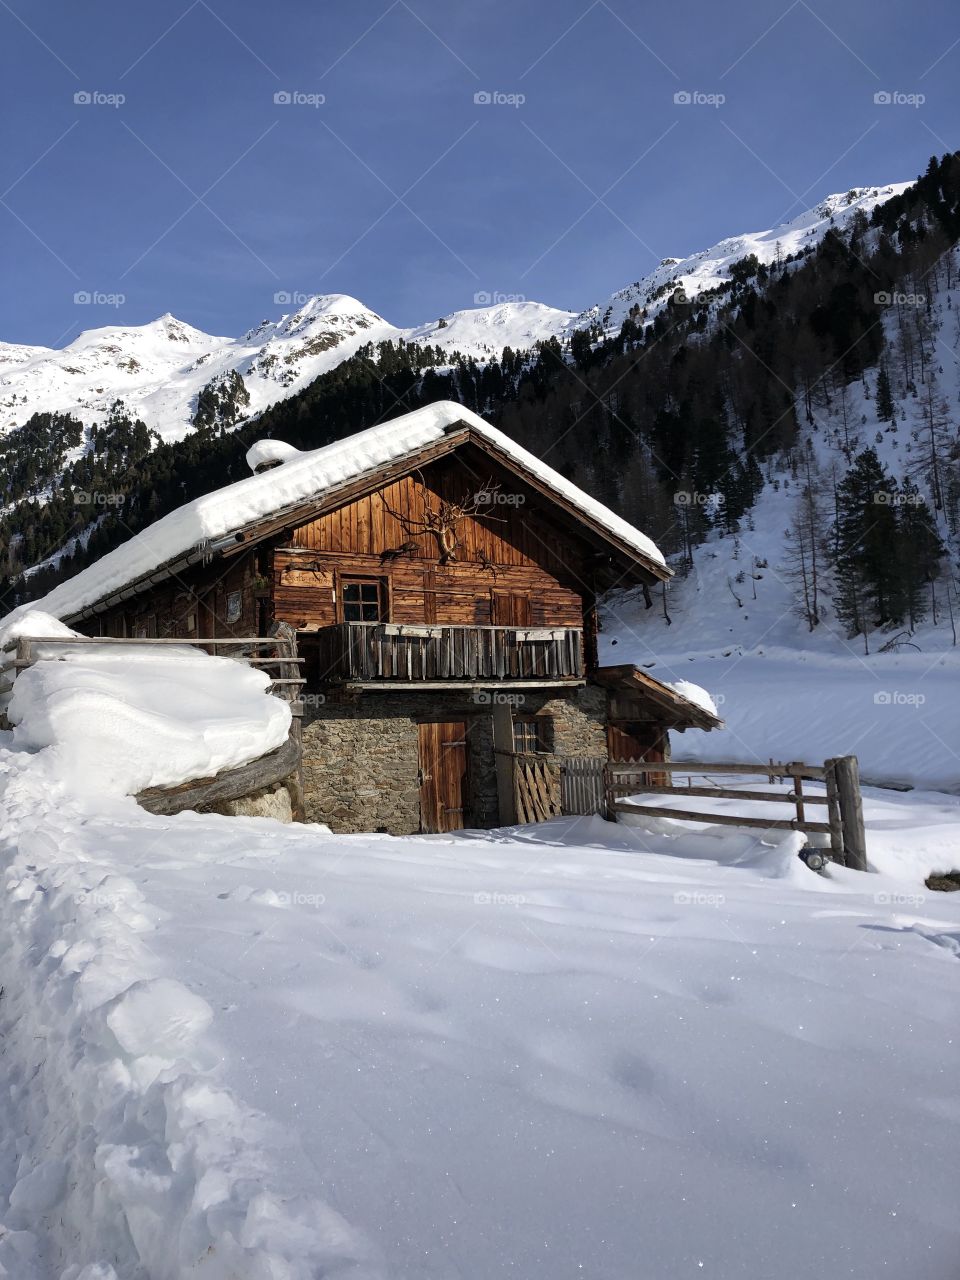 Winter mountain house chalet snow